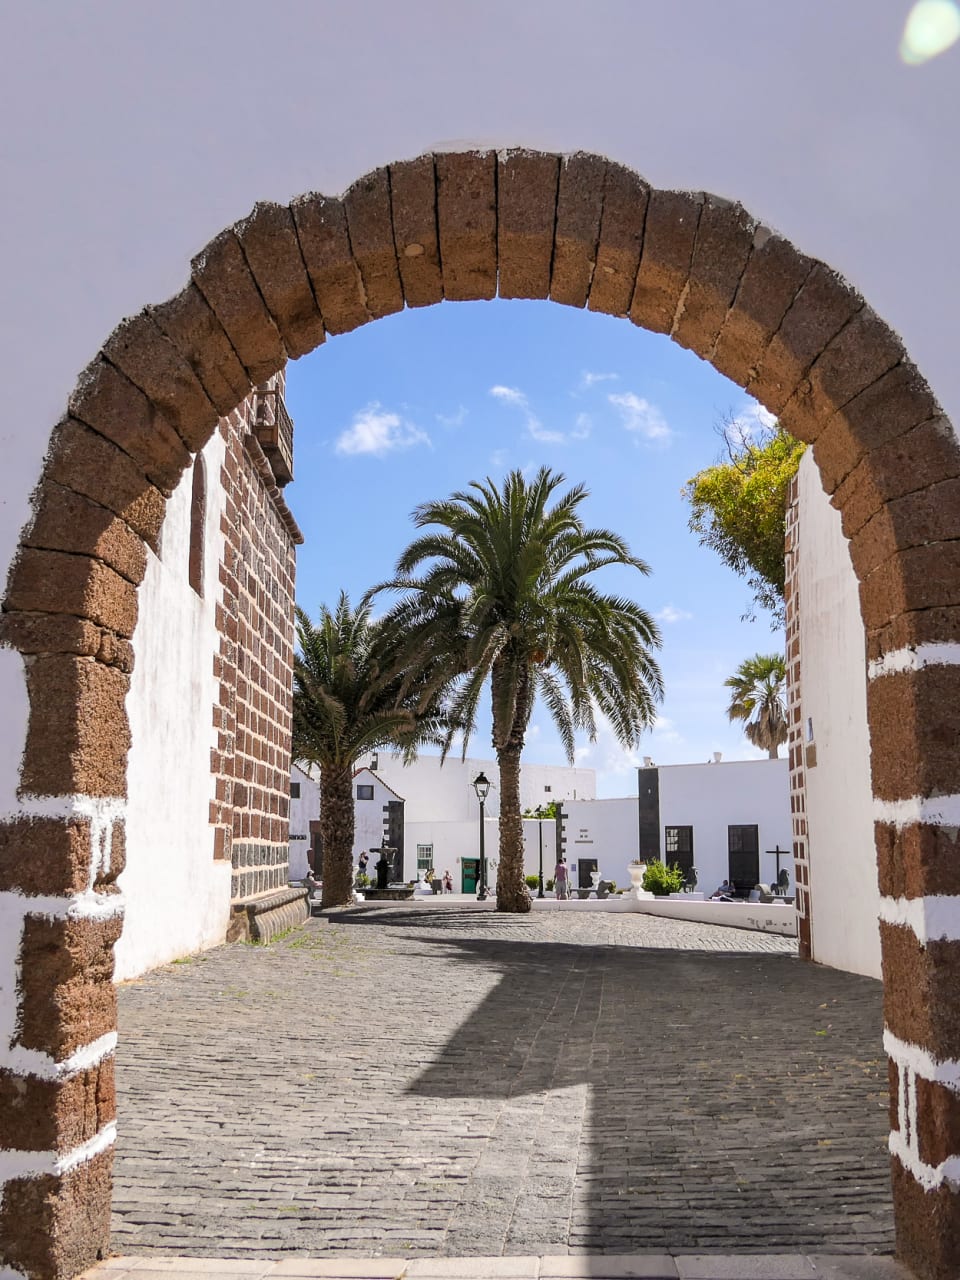 Teguise, Lanzarote © Joachim Negwer